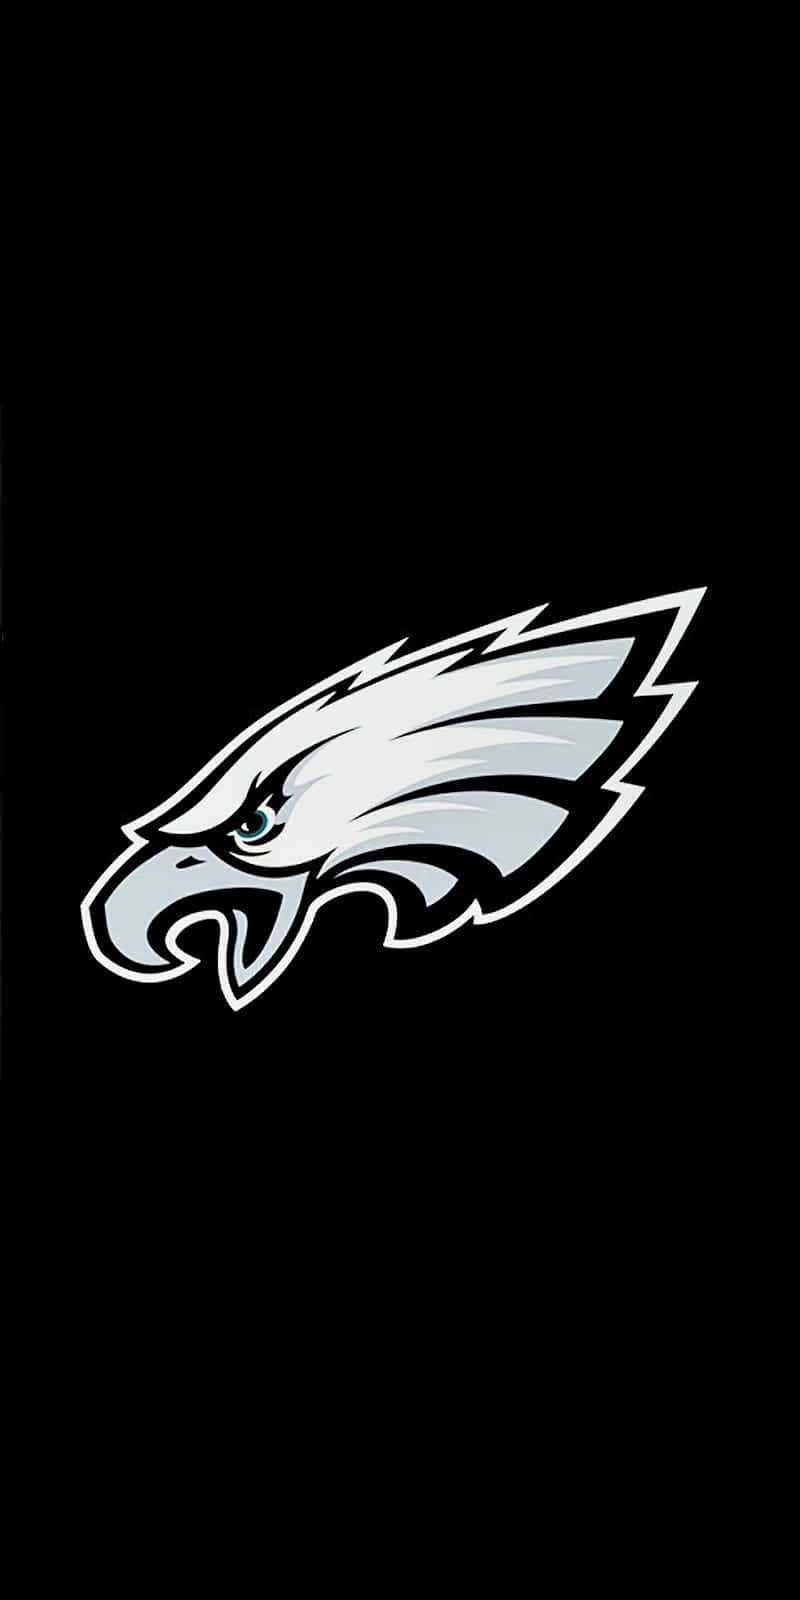 Download Philadelphia Eagles Iphone Wallpaper 